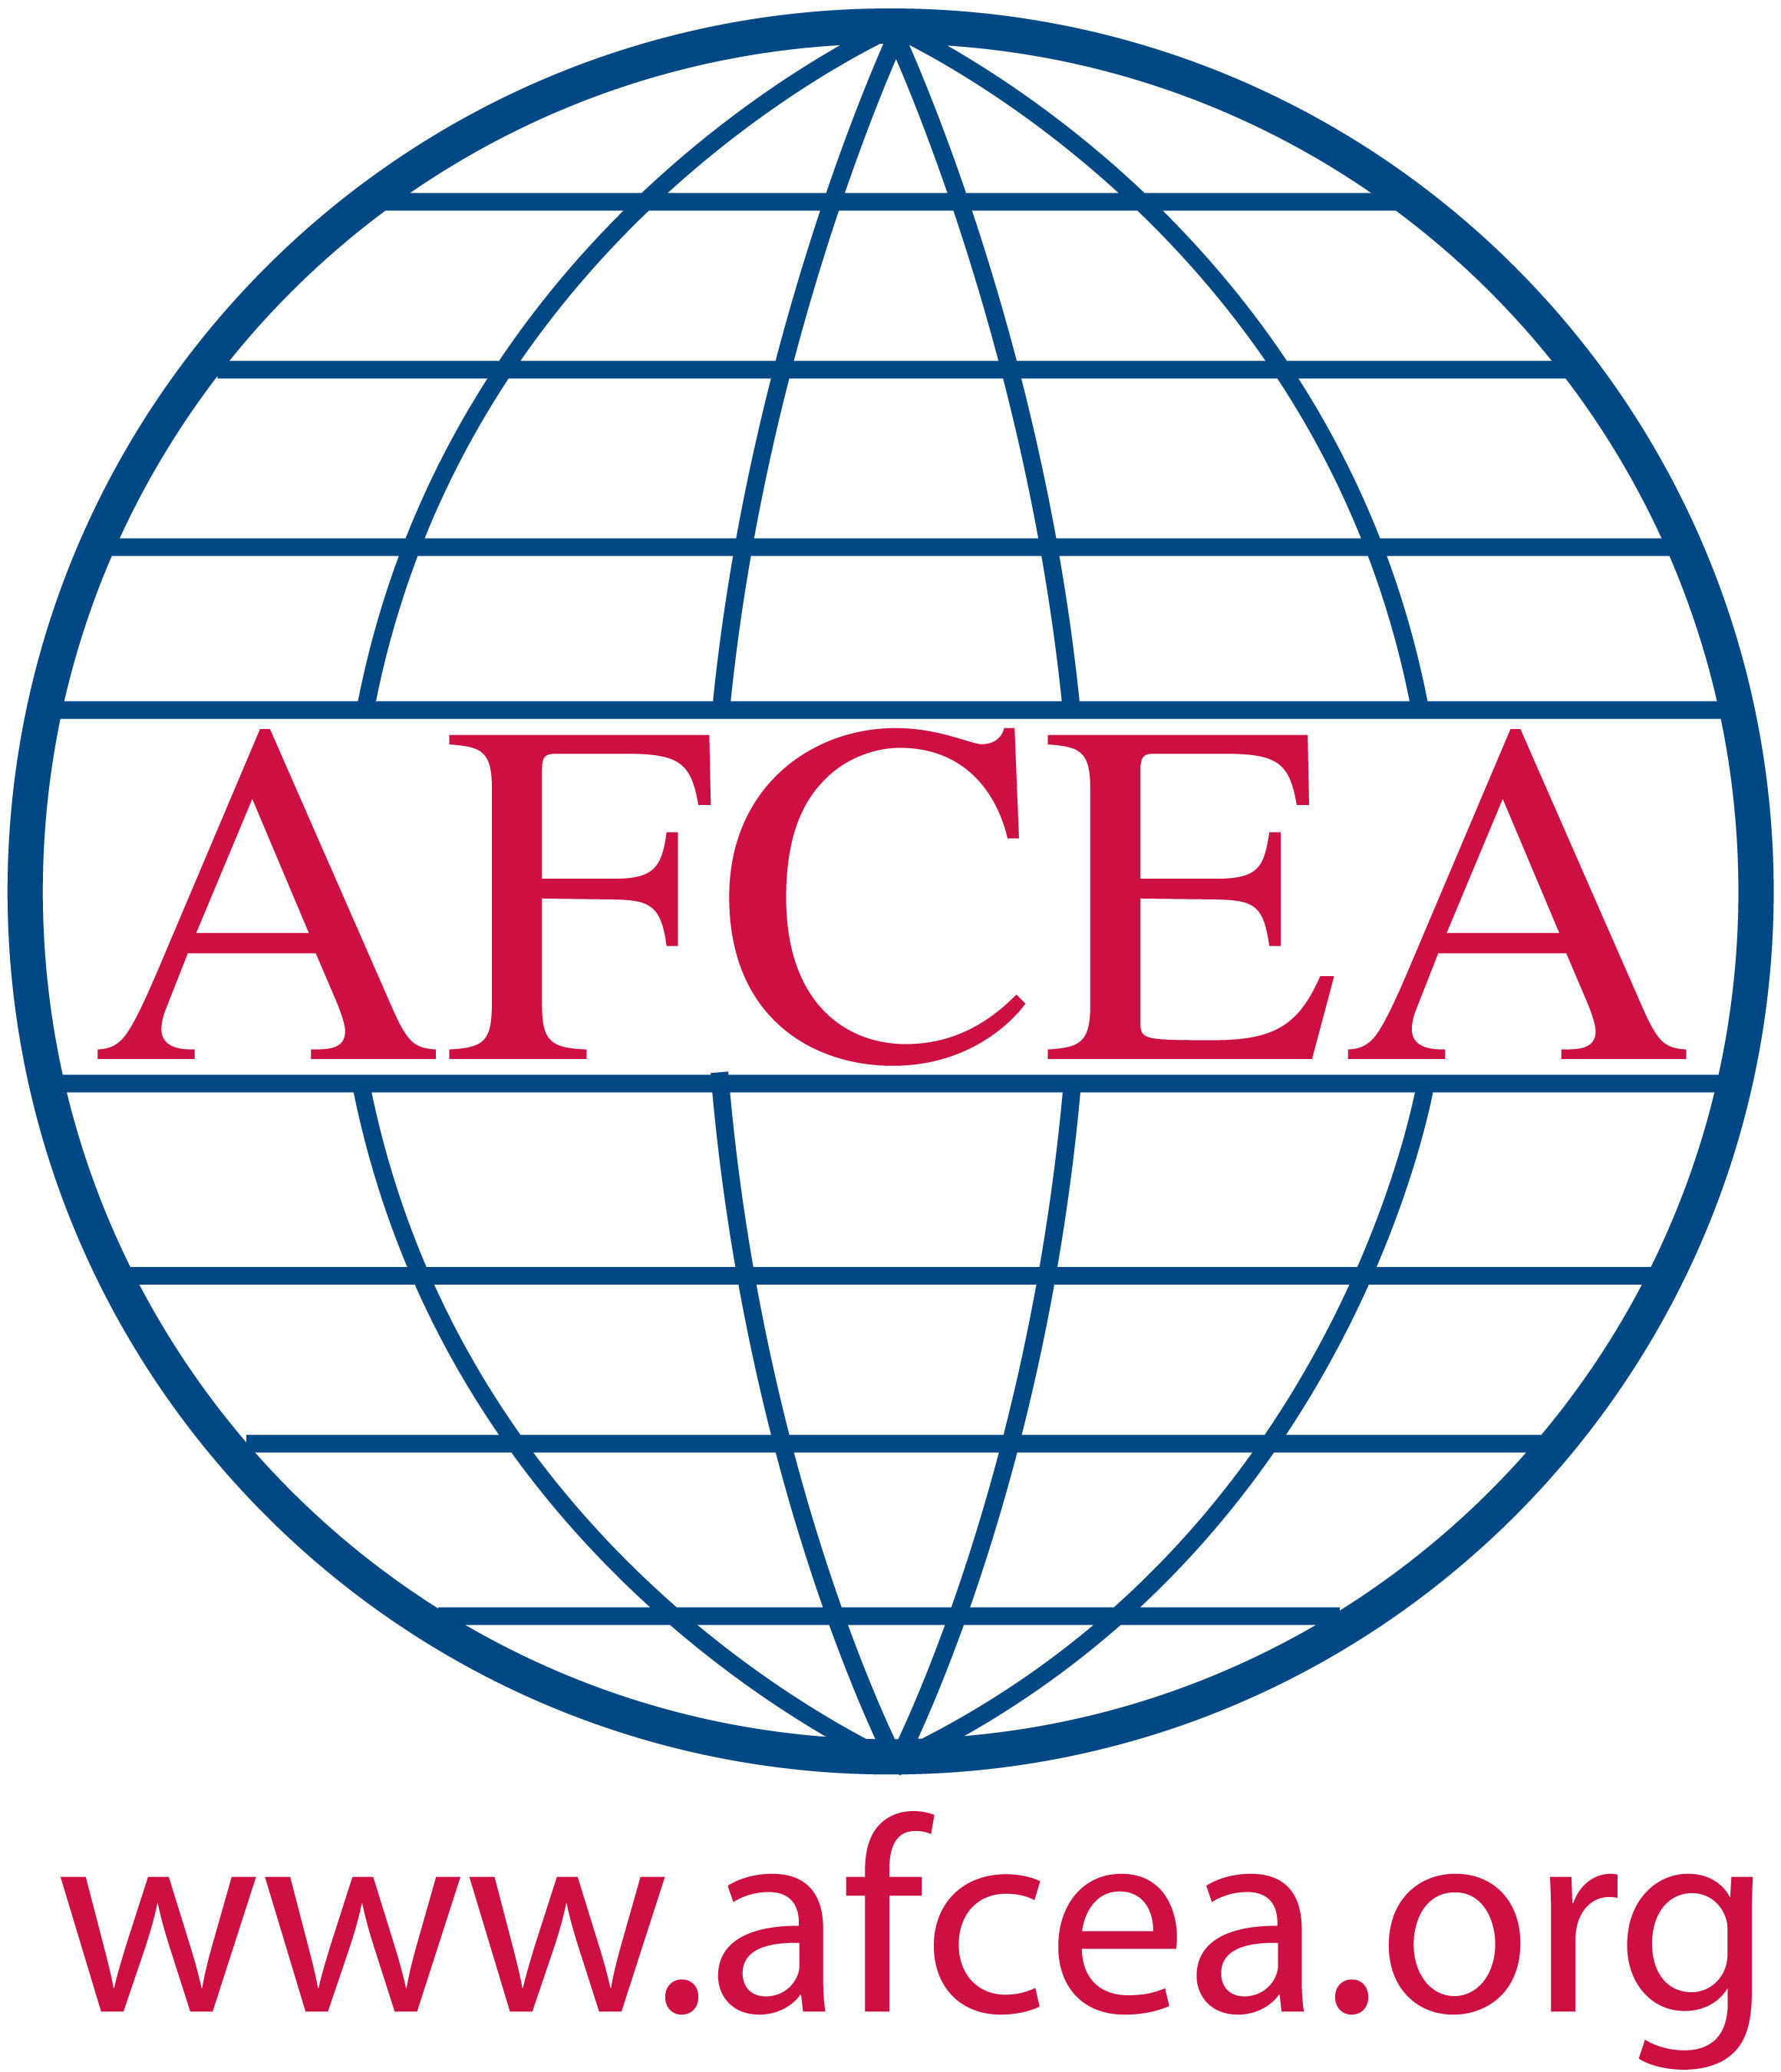 AFCEA International Logo